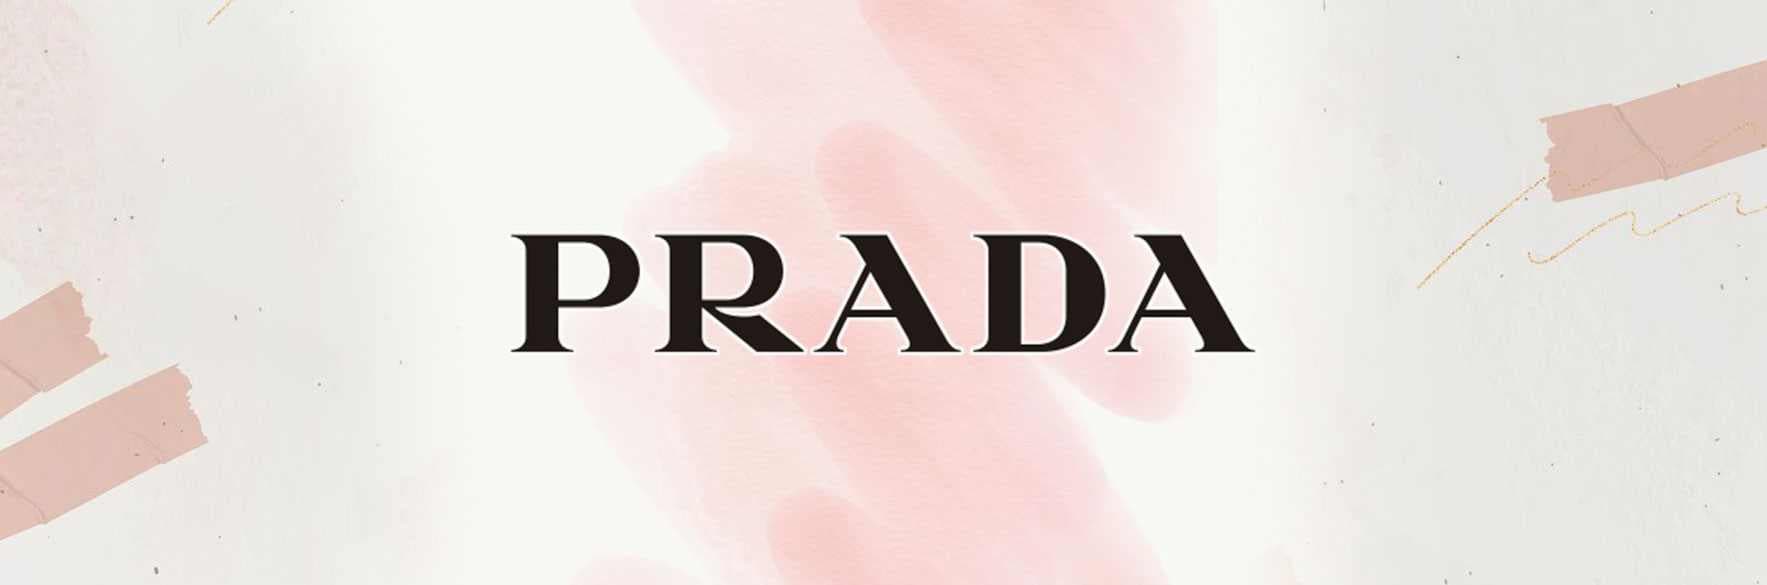 پرادا | محصولات اصل PRADA